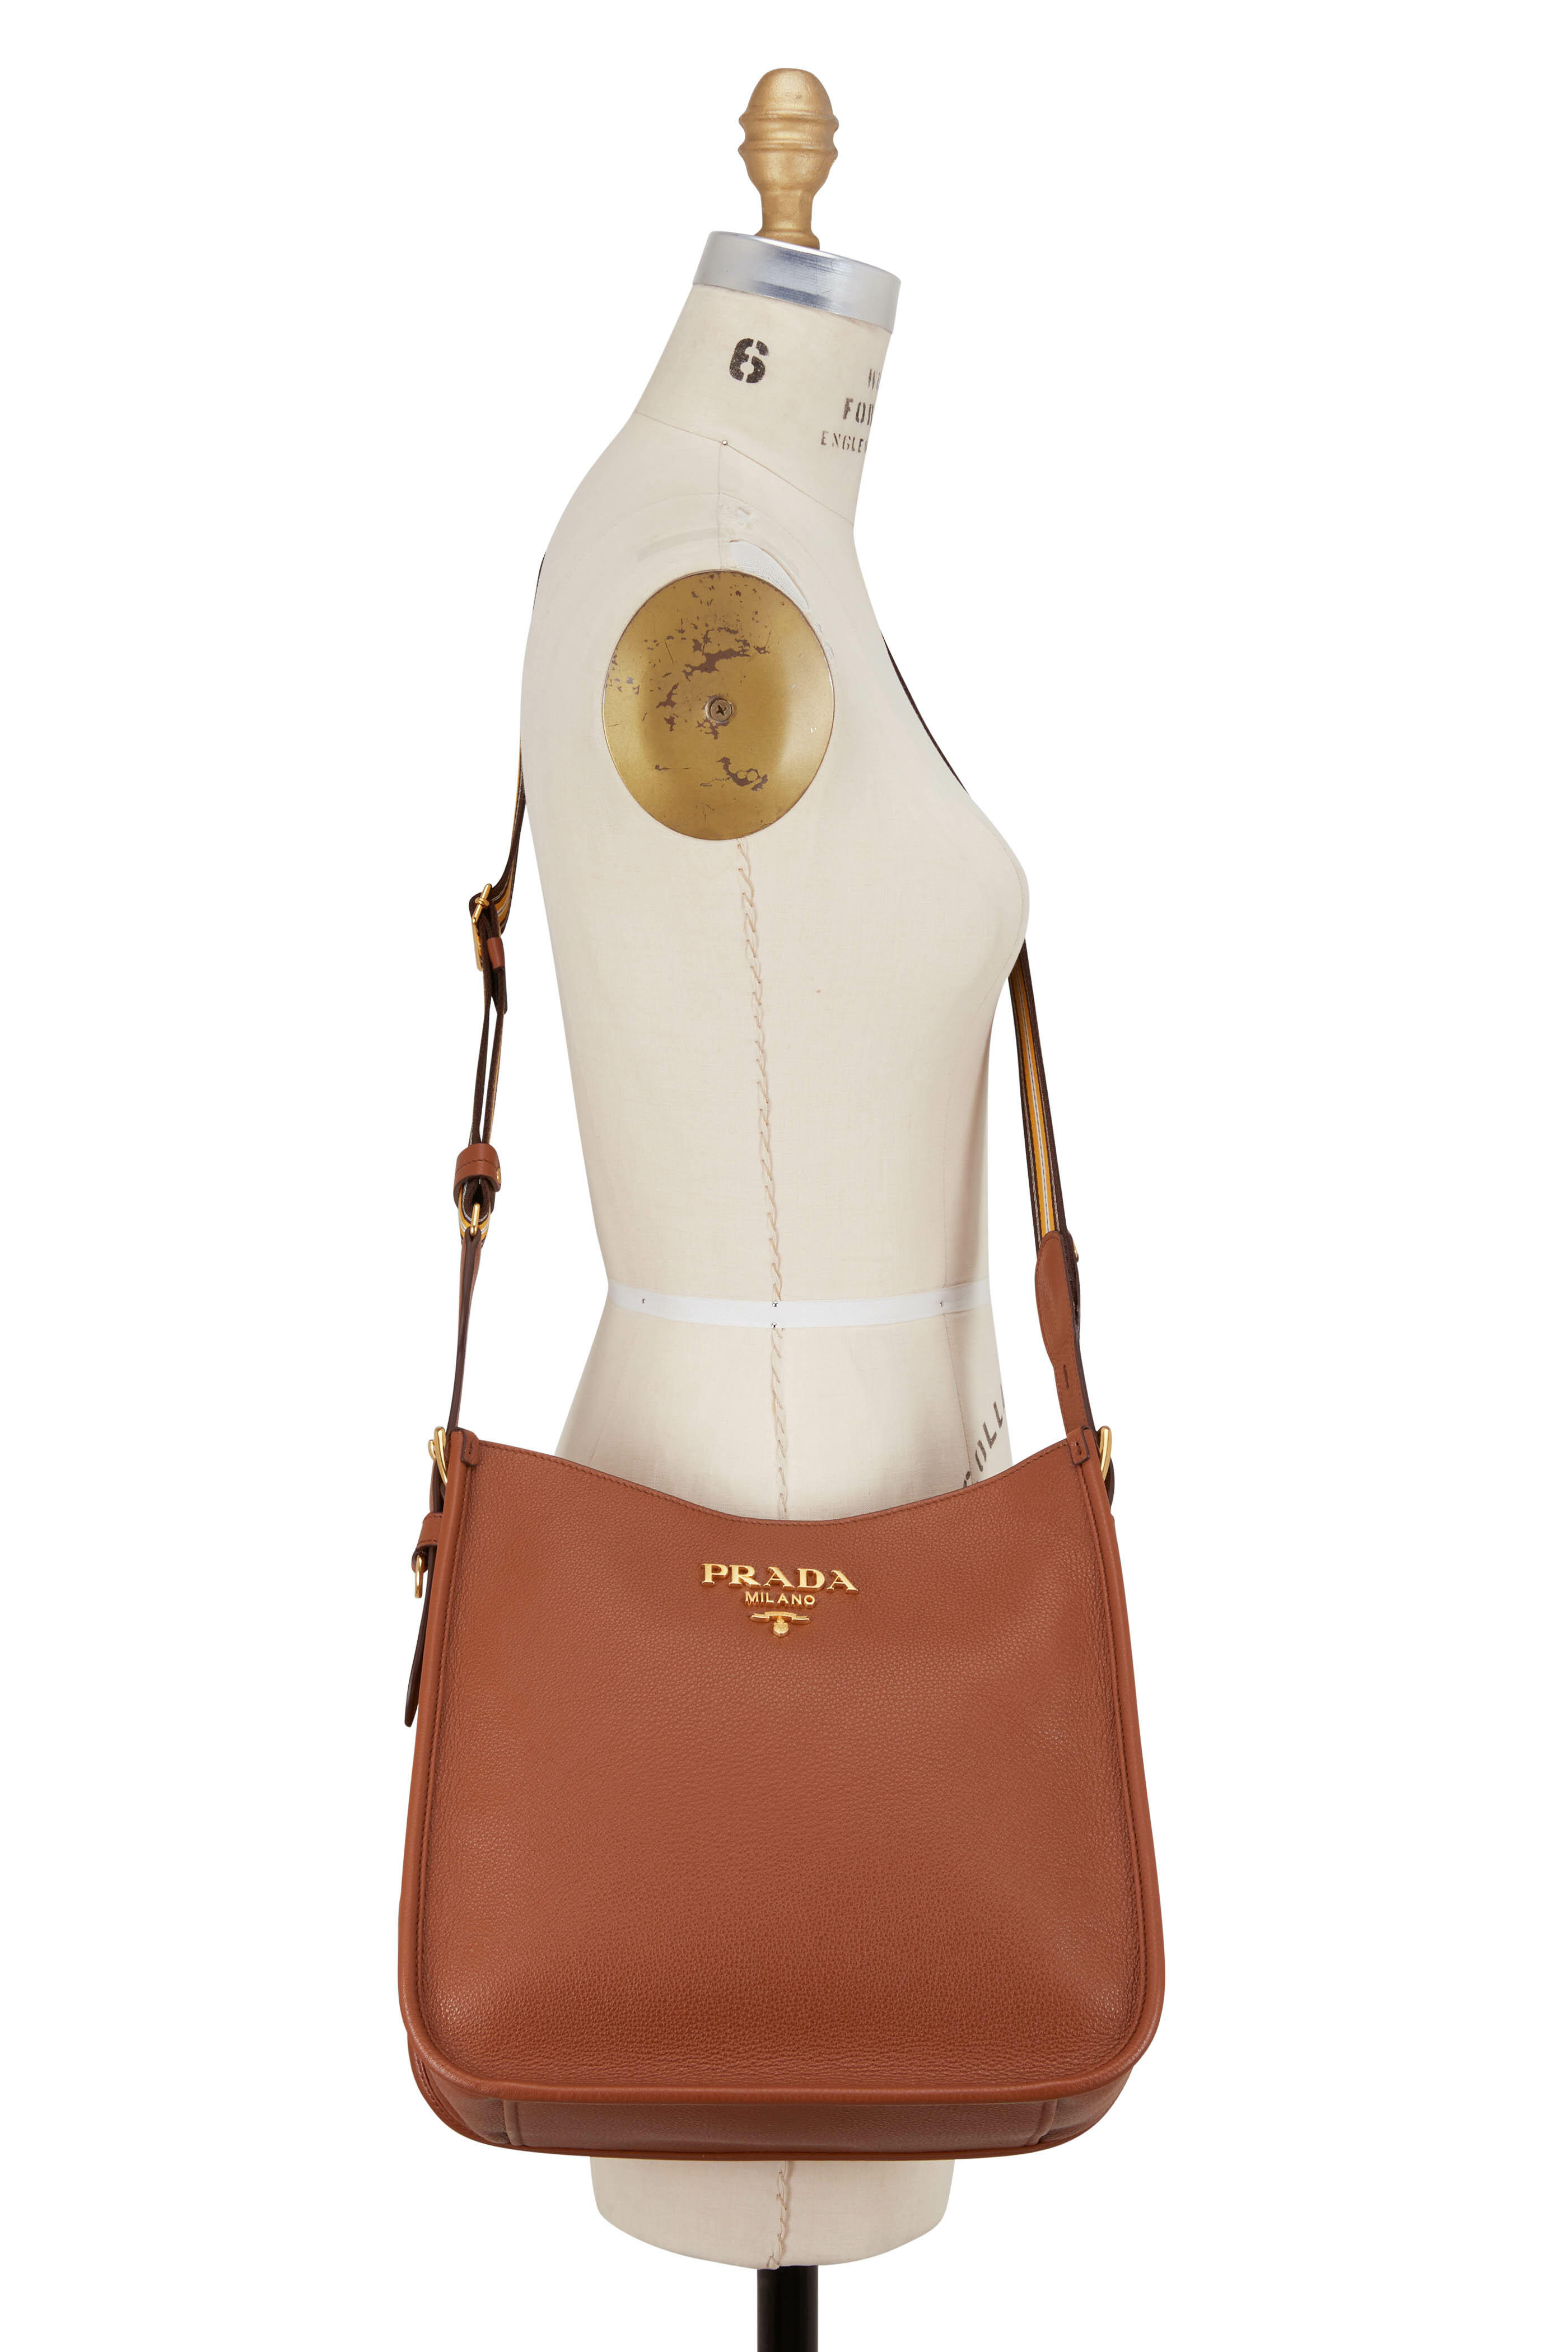 Prada Hobo Shoulder Bag in Brown